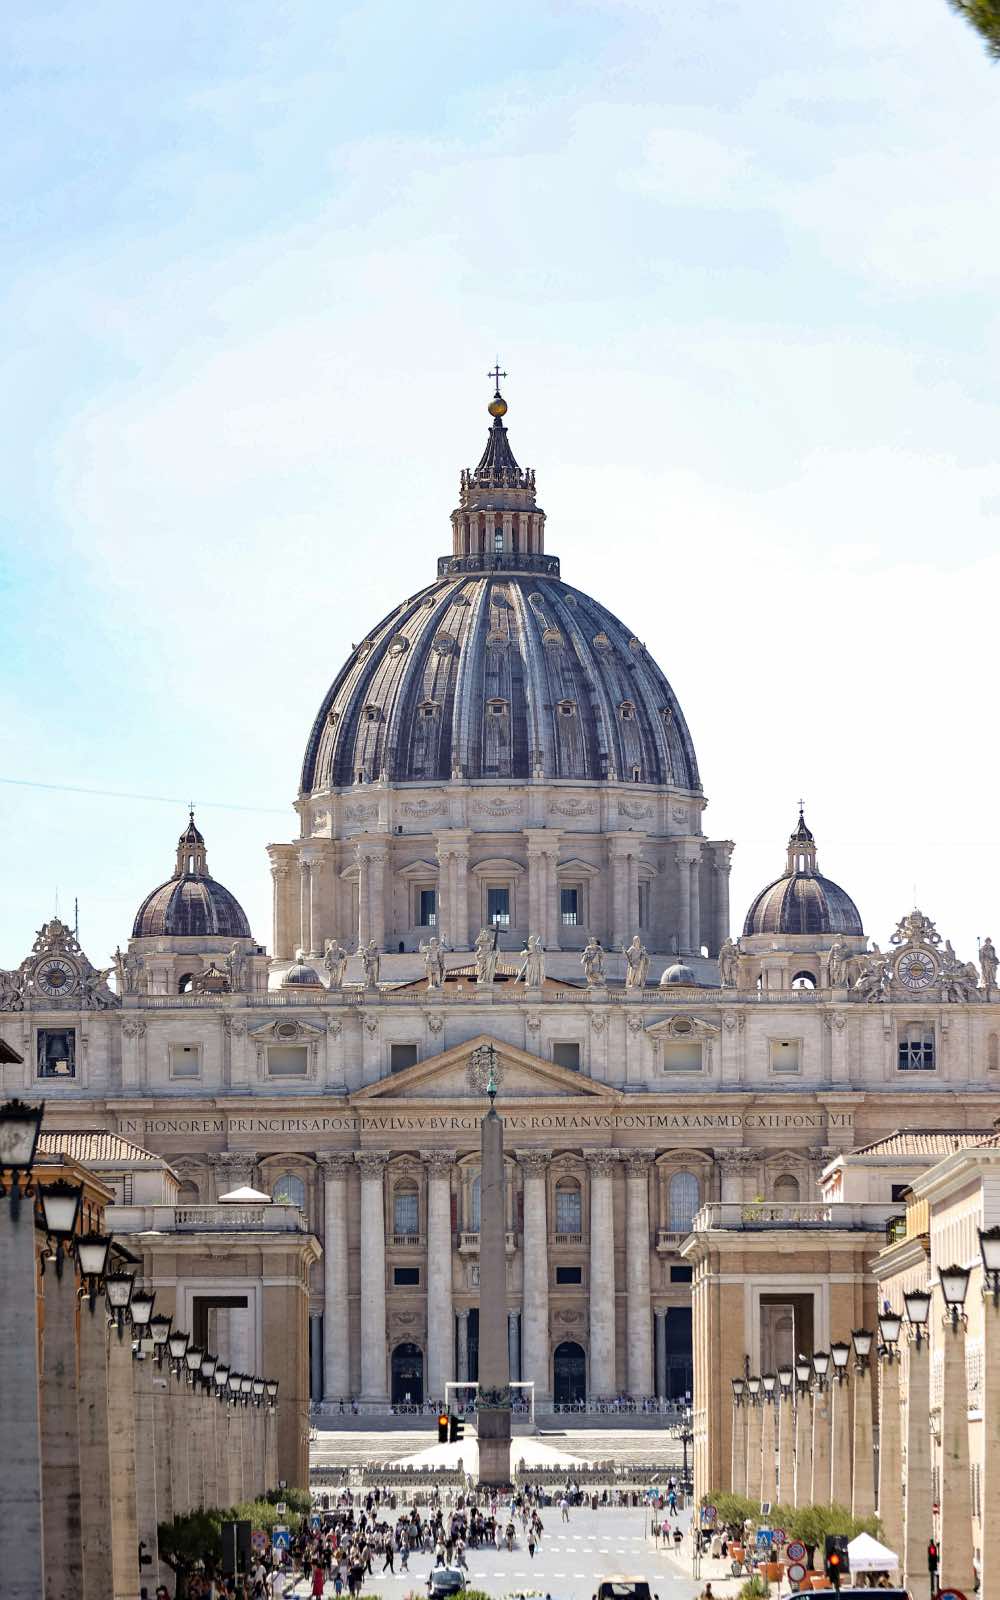 basilica de san pedro del vaticano, arquitectura barroca en roma